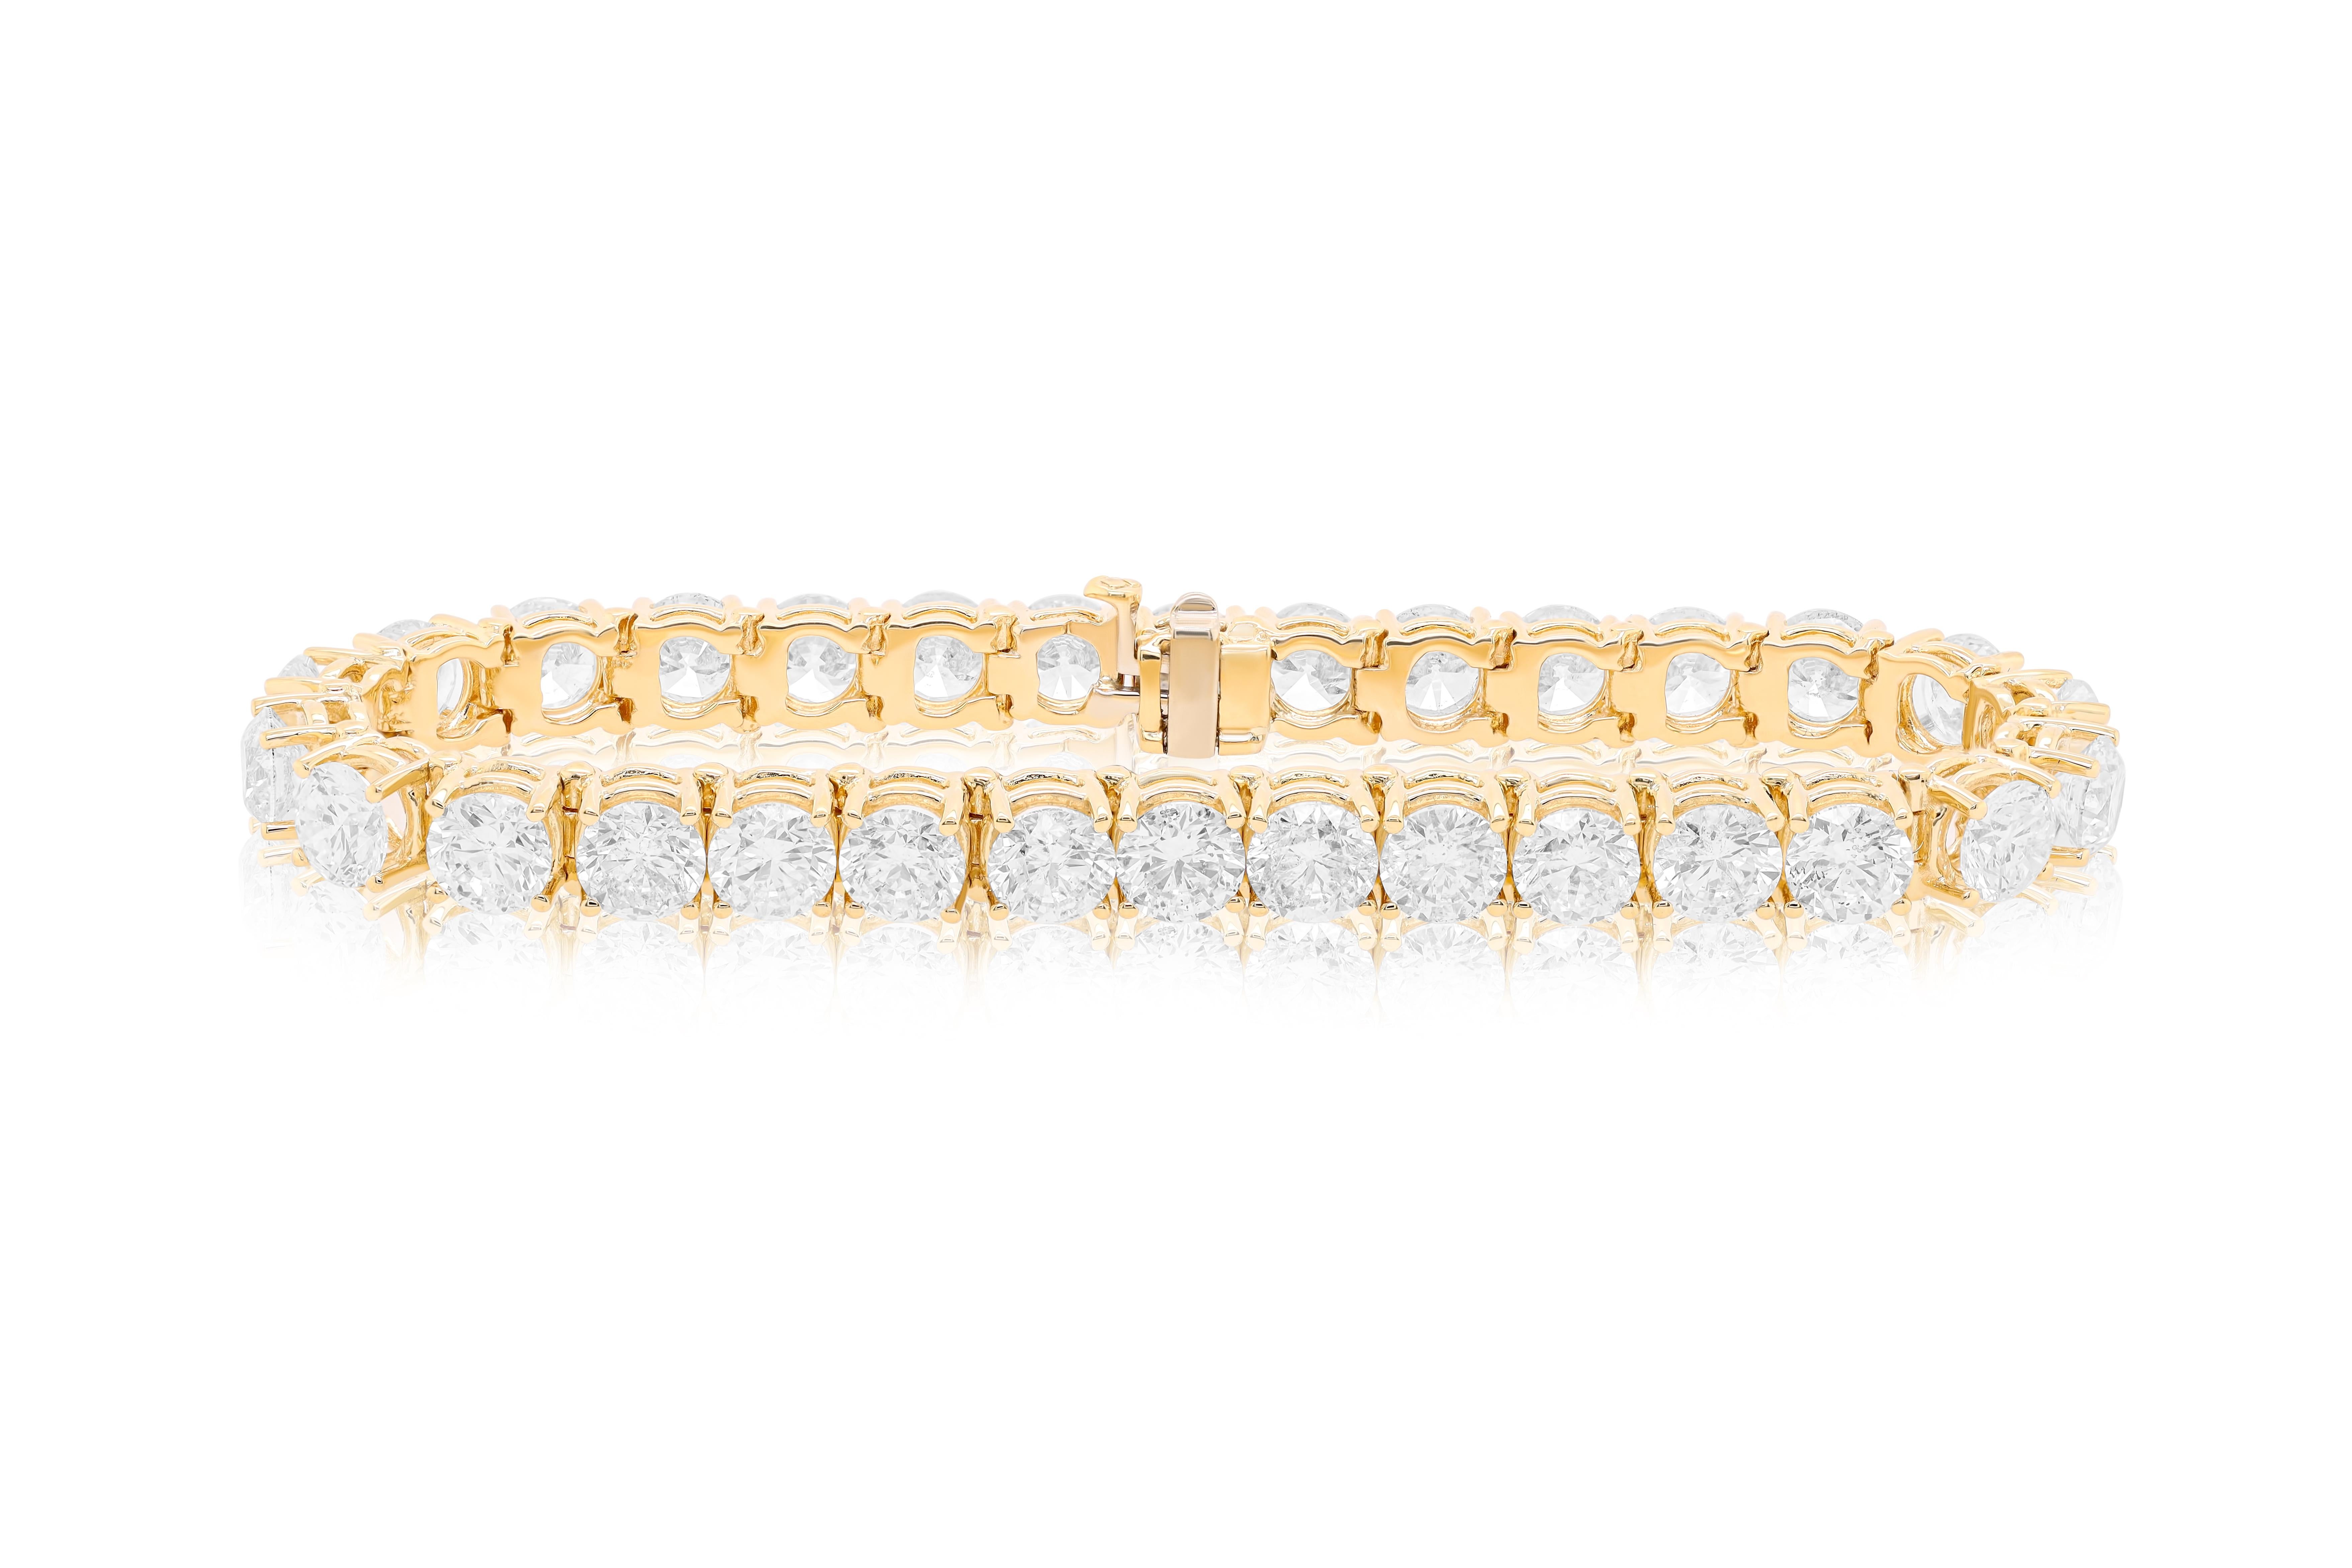 Brilliant Cut Diana M. custom 21.35 cts round diamond tennis bracelet set in 18kt yellow gold For Sale